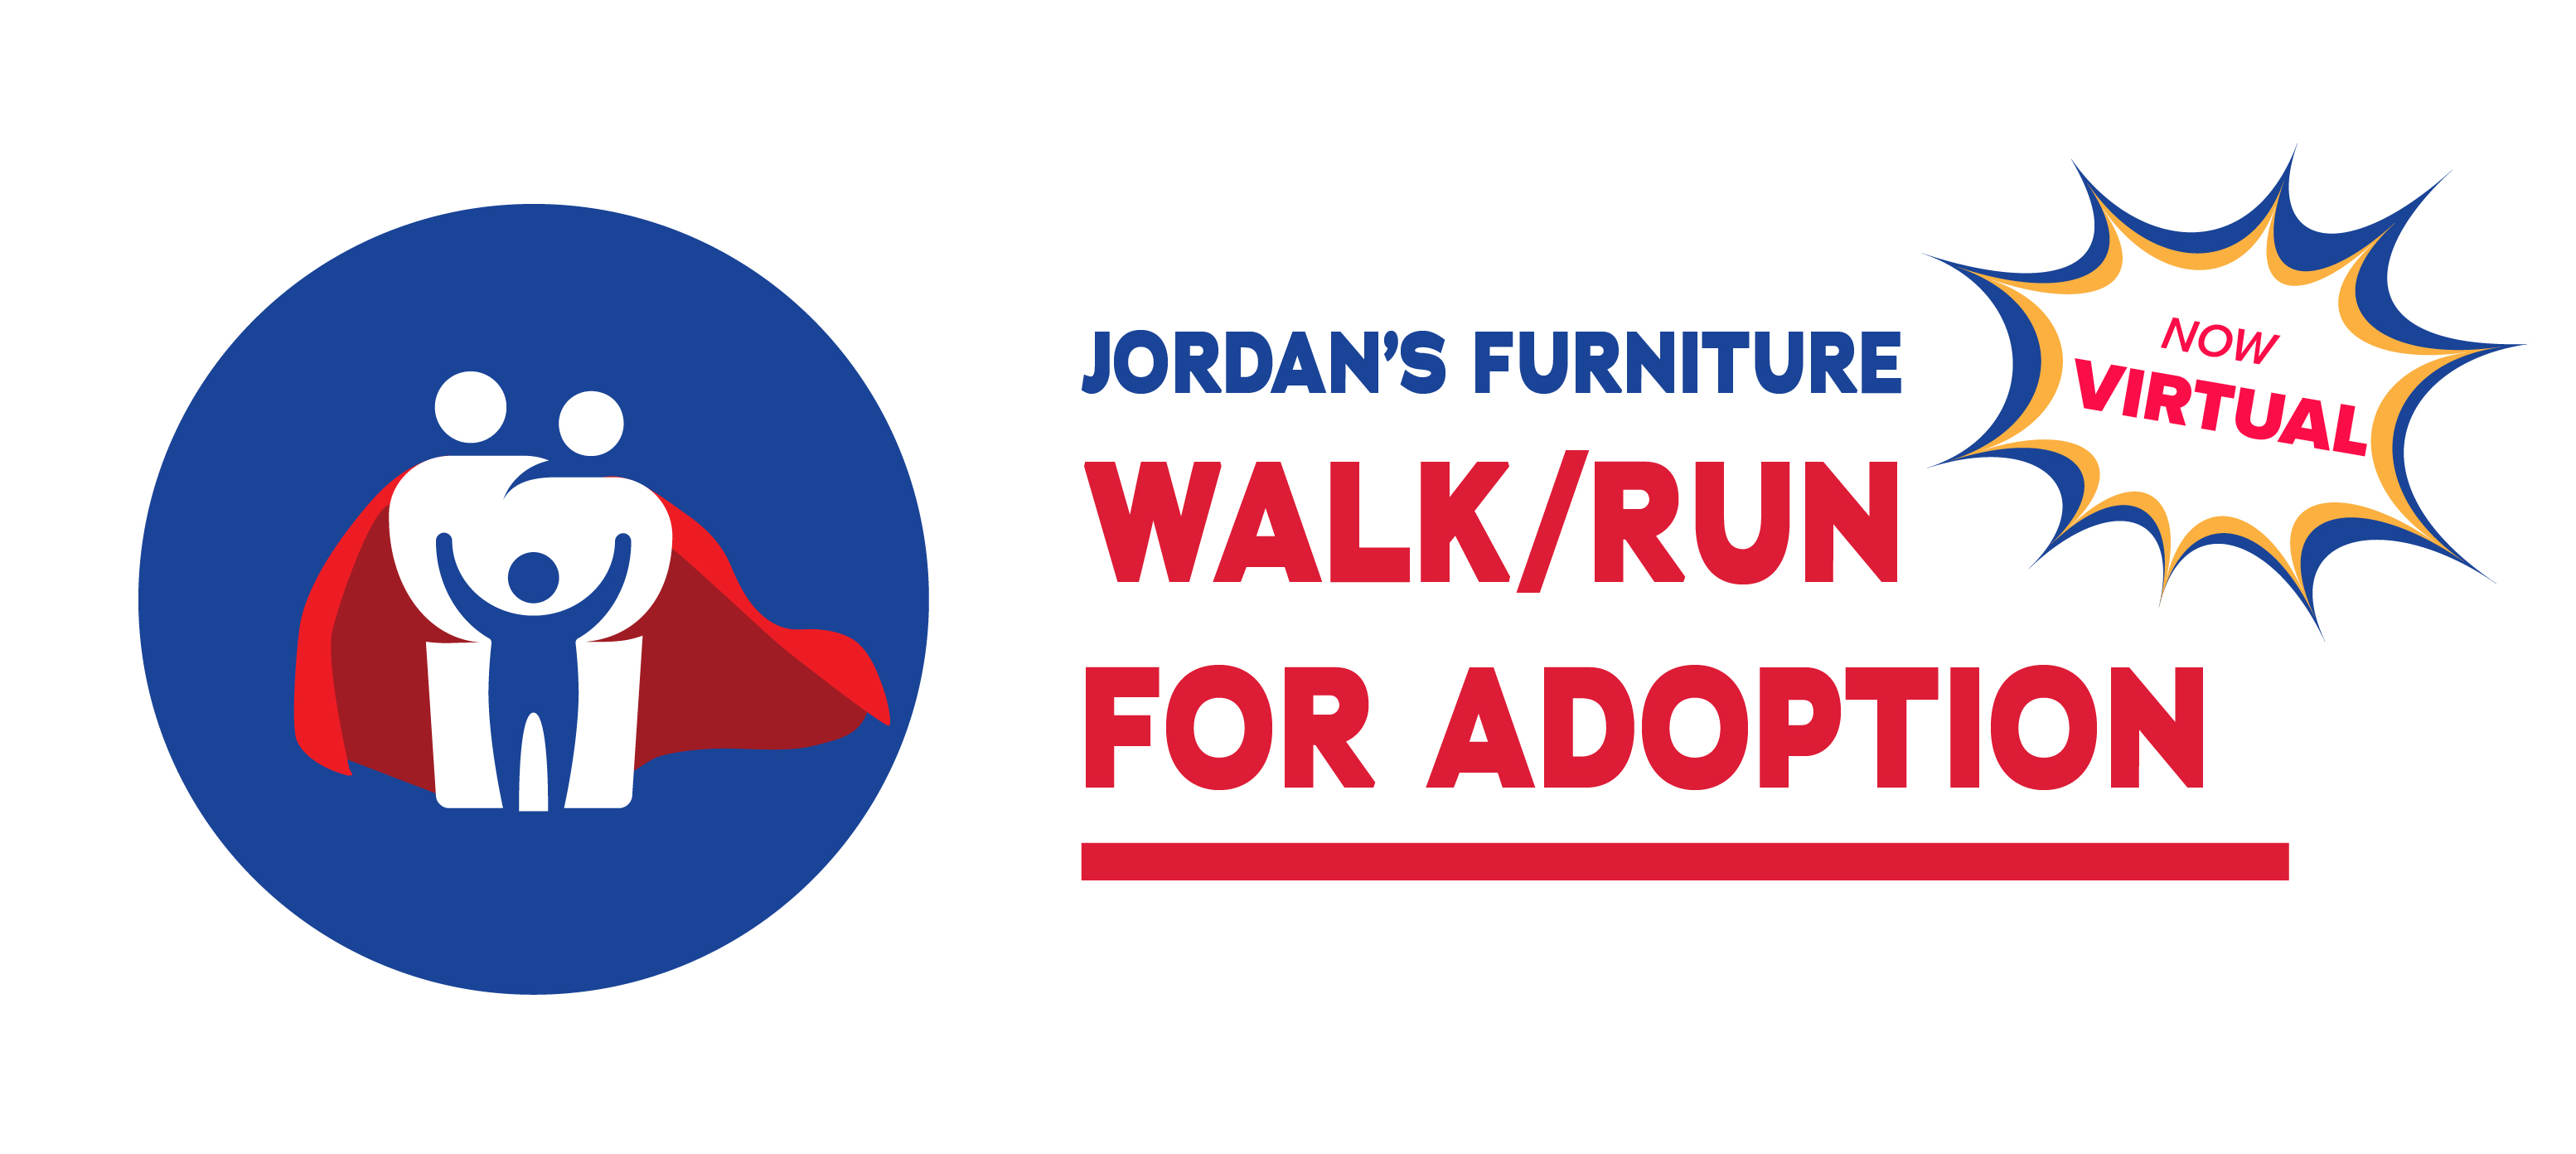 Jordan's Furniture 2020 Virtual Walk Run for Adoption